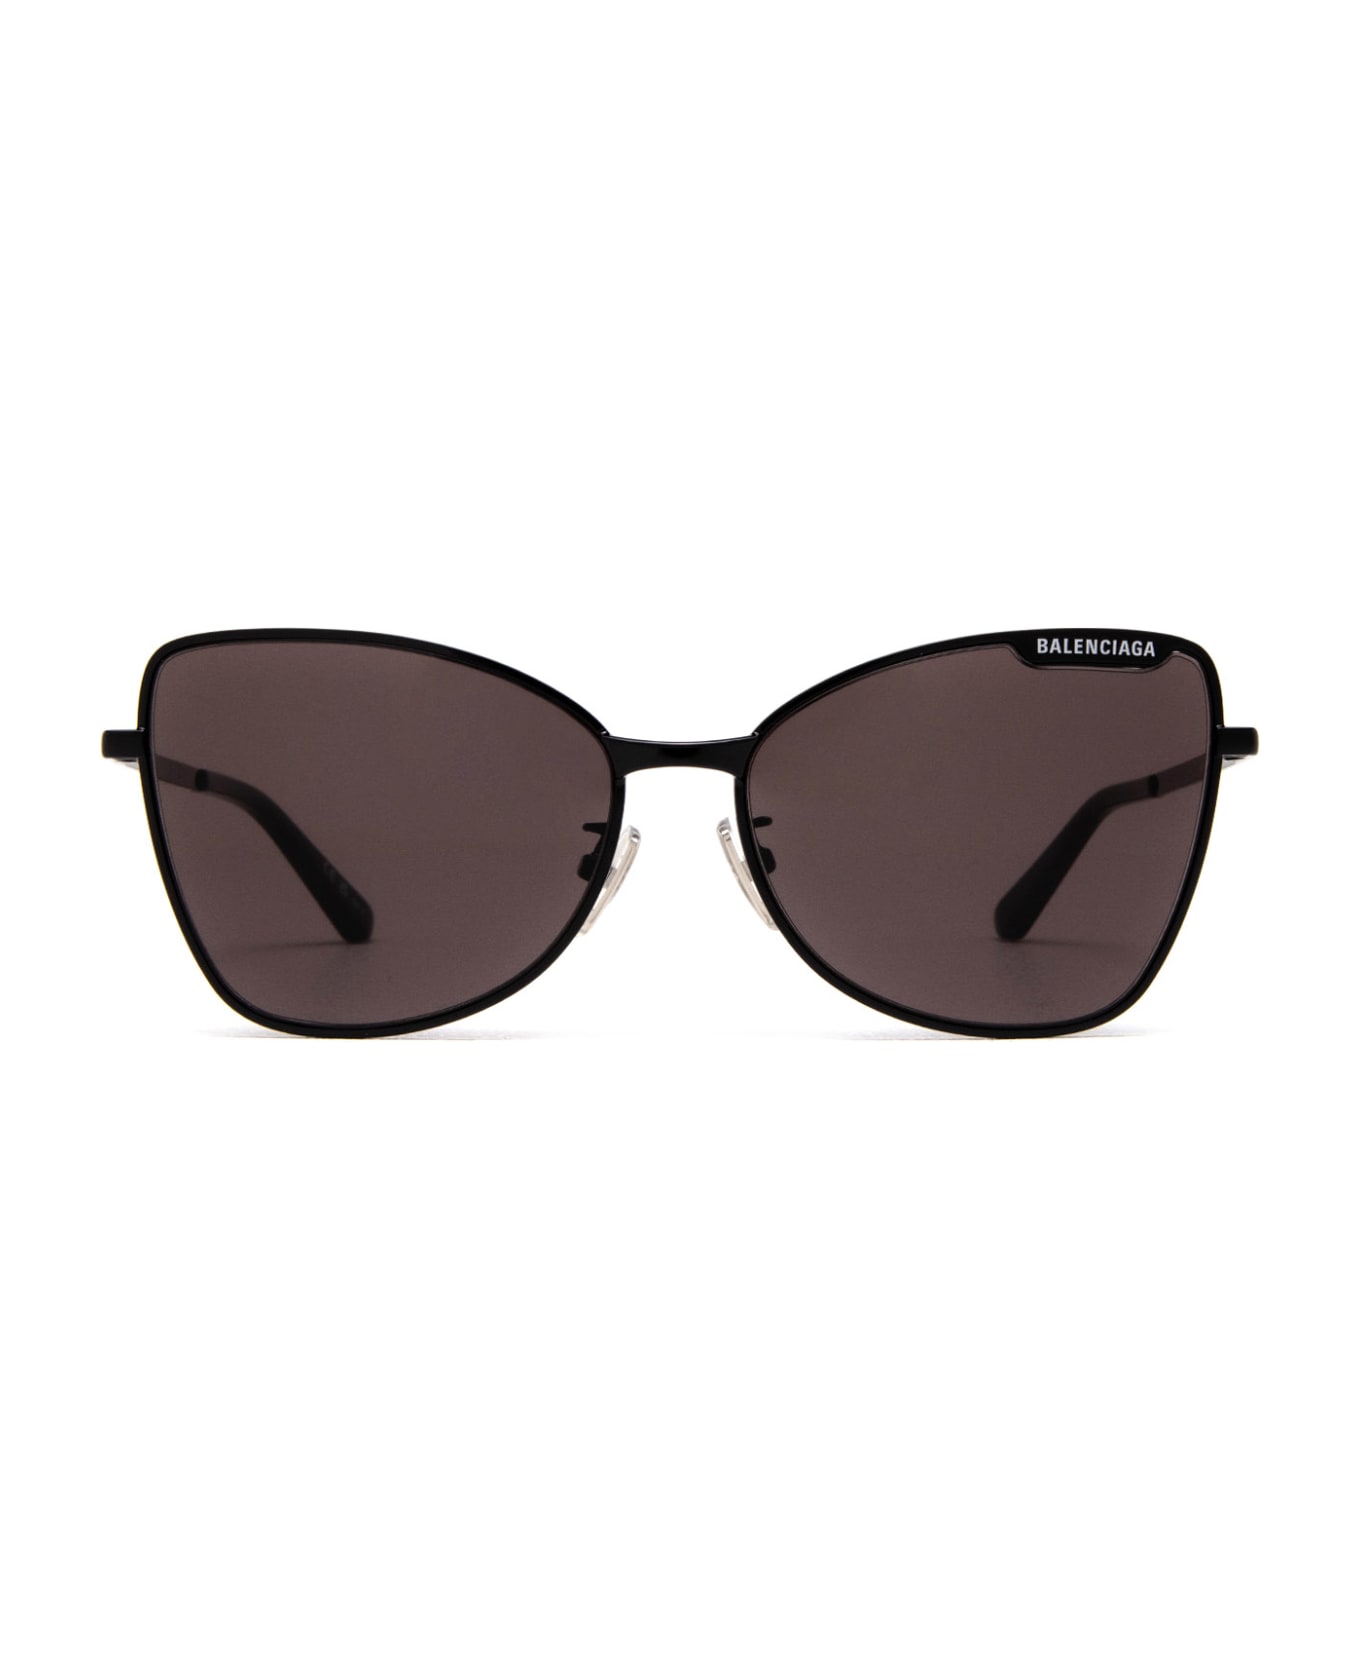 Balenciaga Eyewear Butterfly Frame Sunglasses - Black